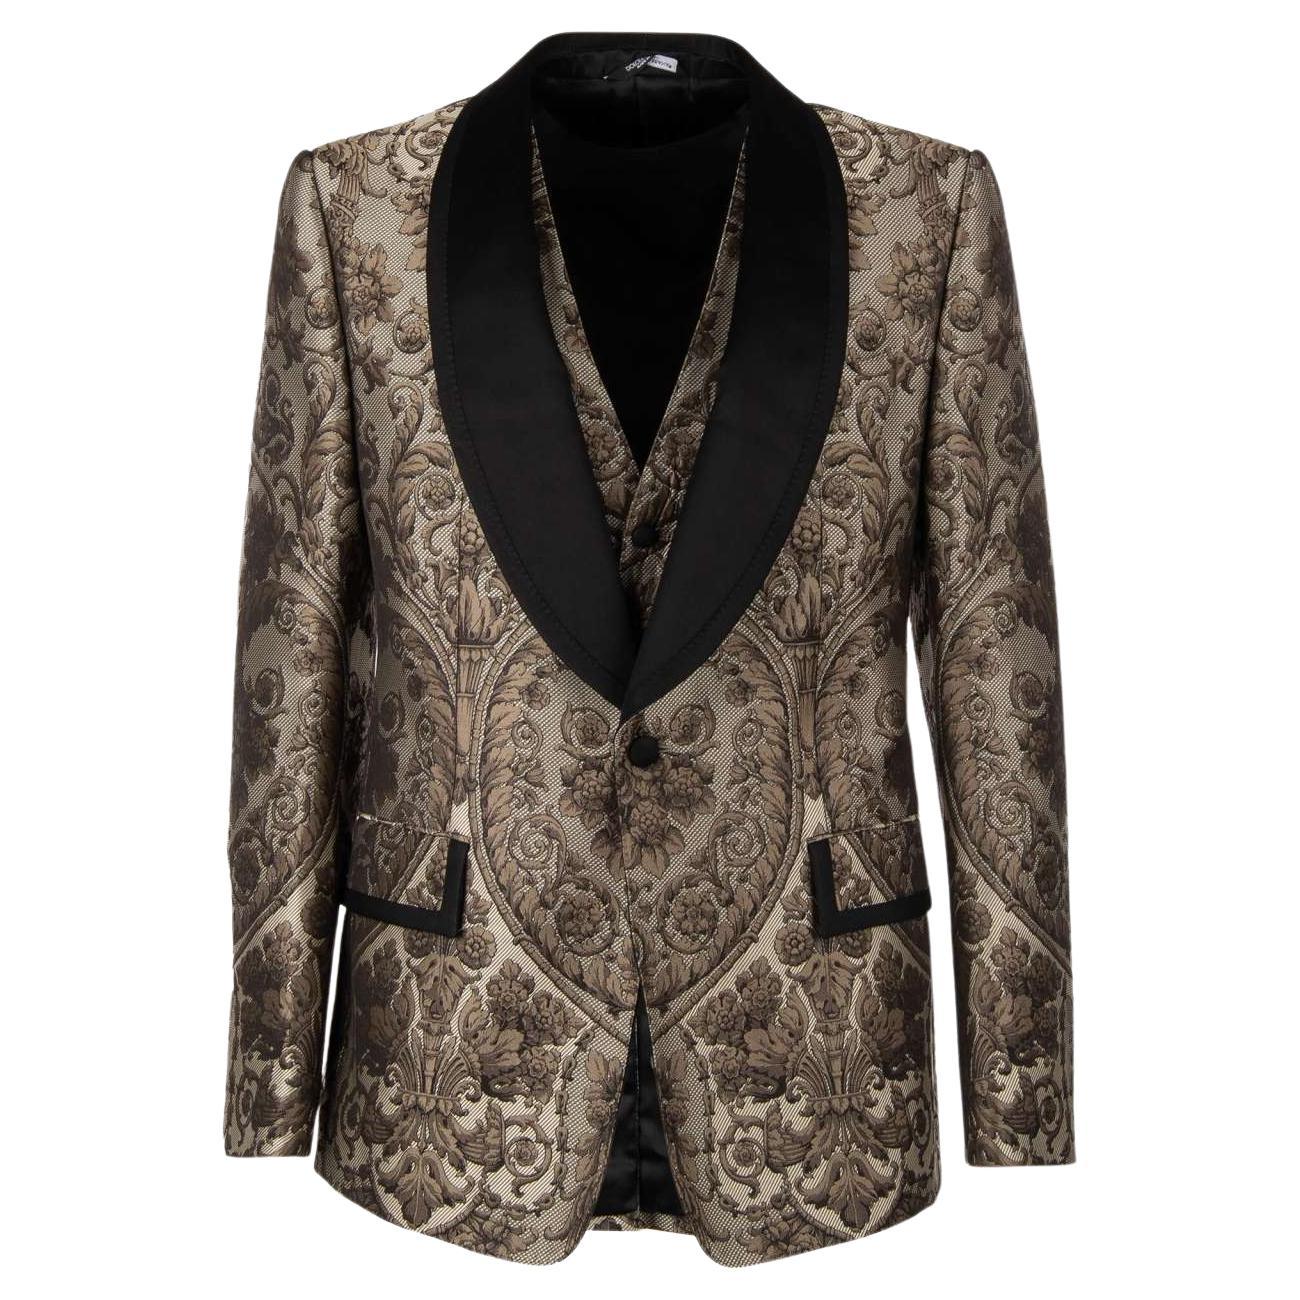 Dolce & Gabbana Baroque Jacquard Blazer with Waistcoat Black Beige 50 US 40 M L For Sale